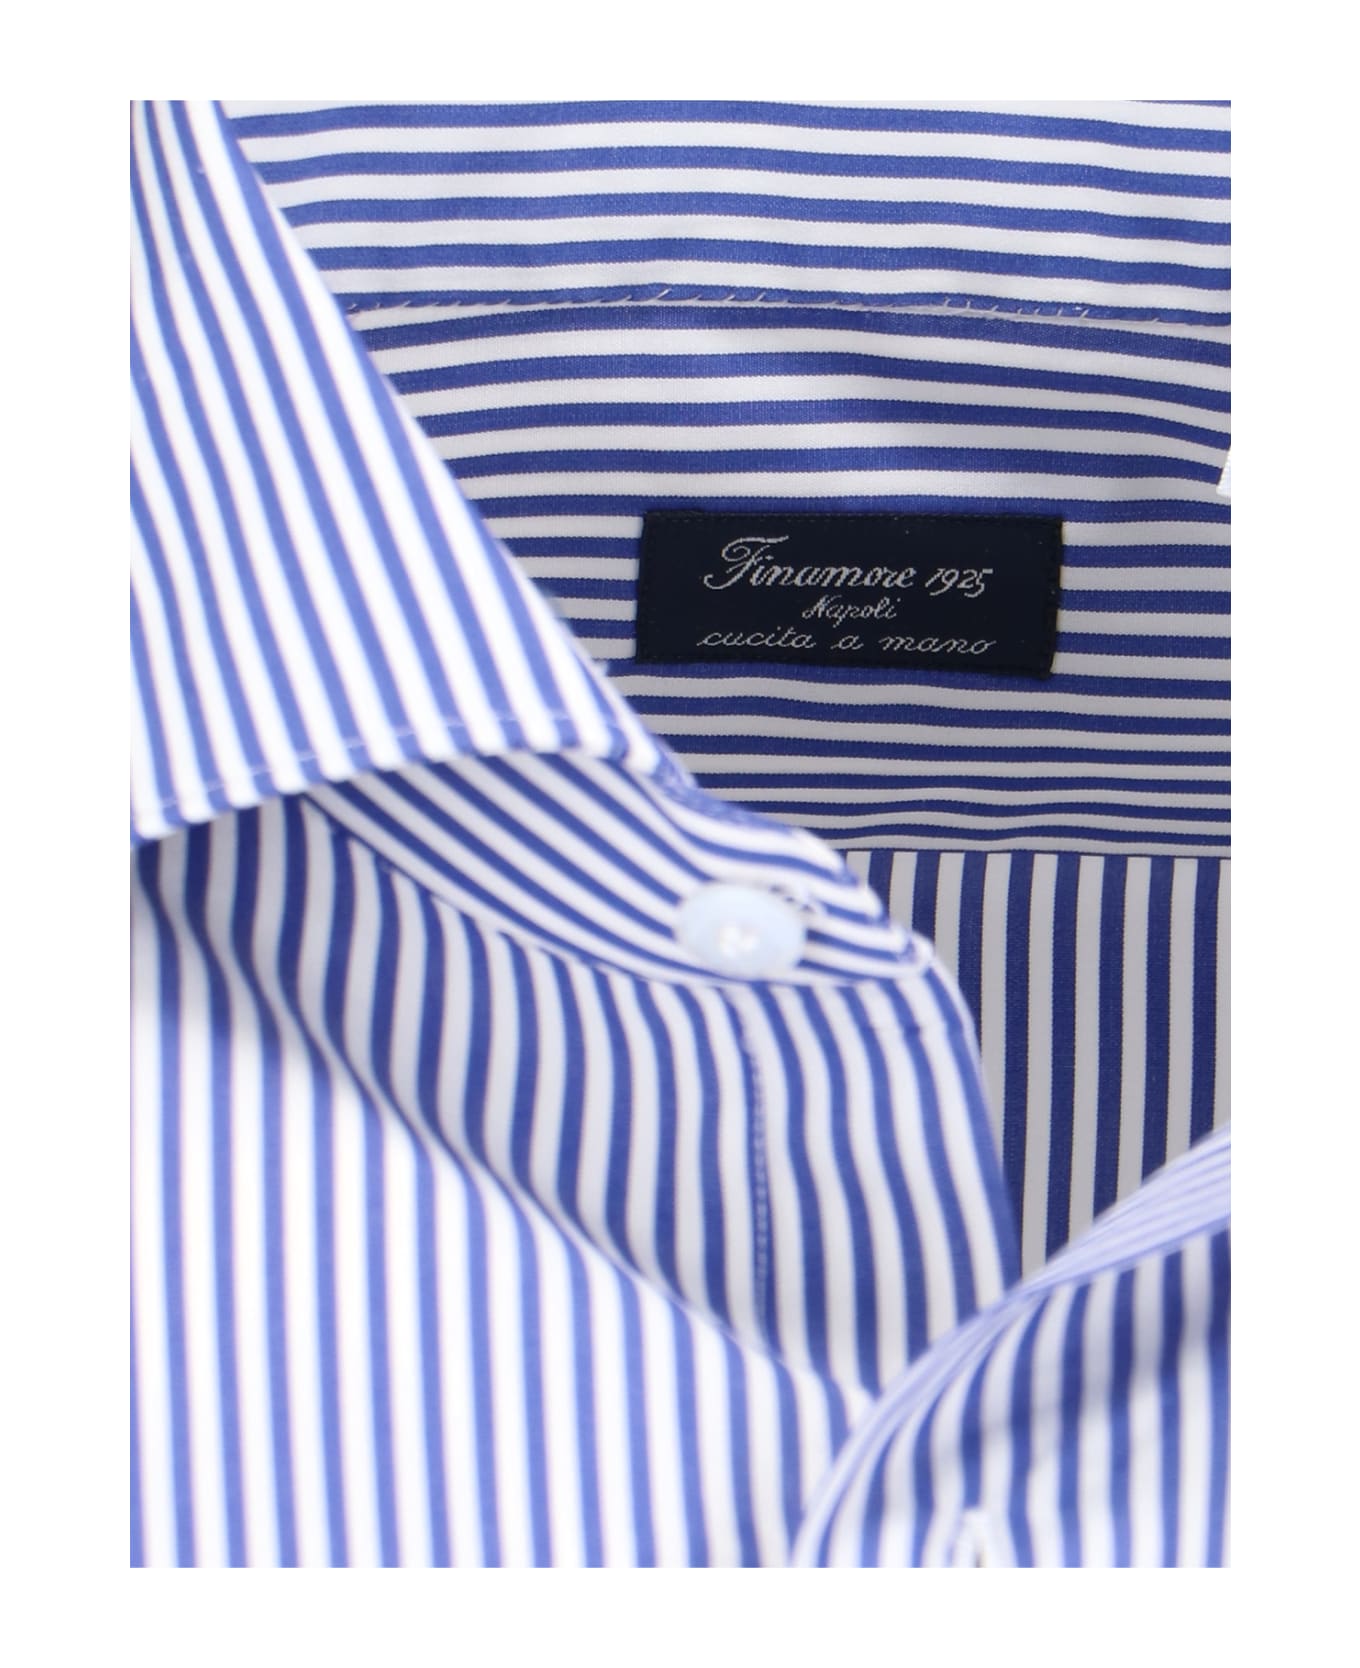 Finamore Stripe Shirt - Blue シャツ